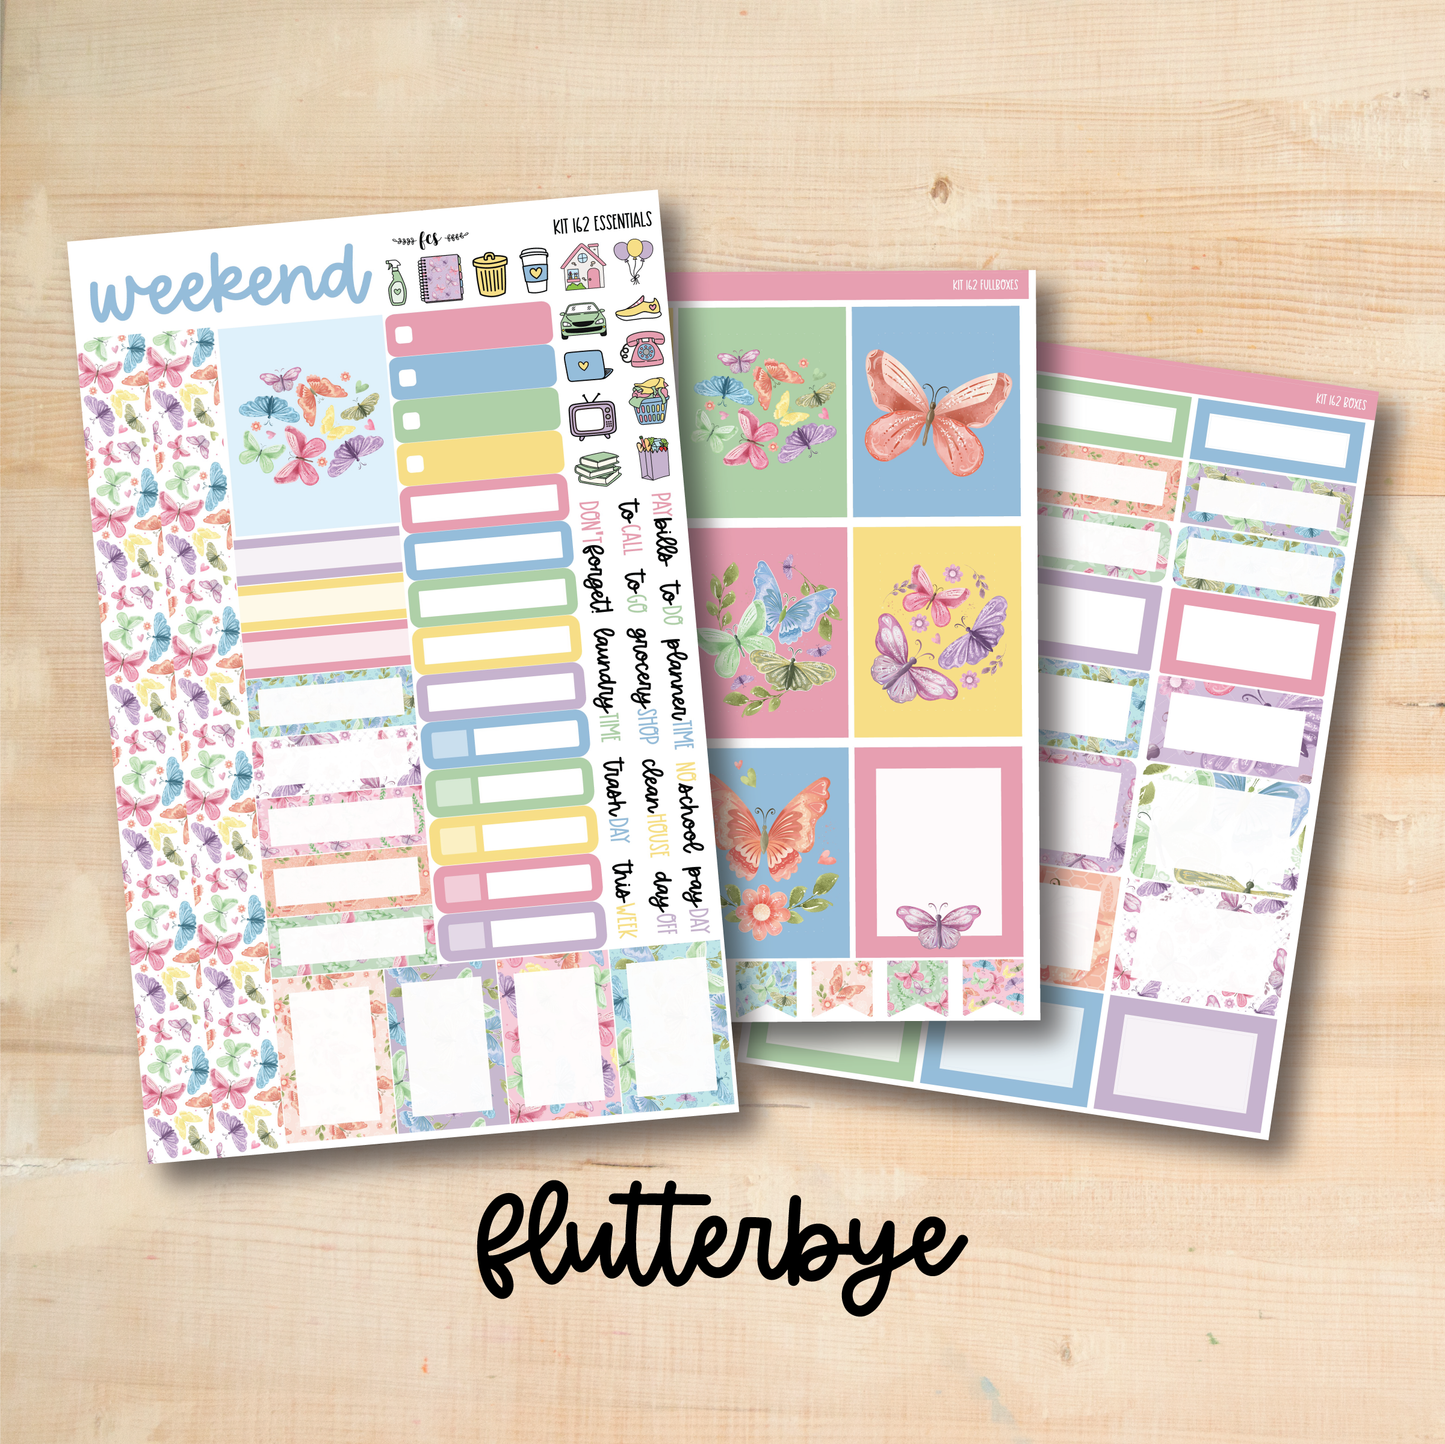 KIT-162 || FLUTTERBYE weekly planner kit for Erin Condren, Plum Paper, MakseLife and more!